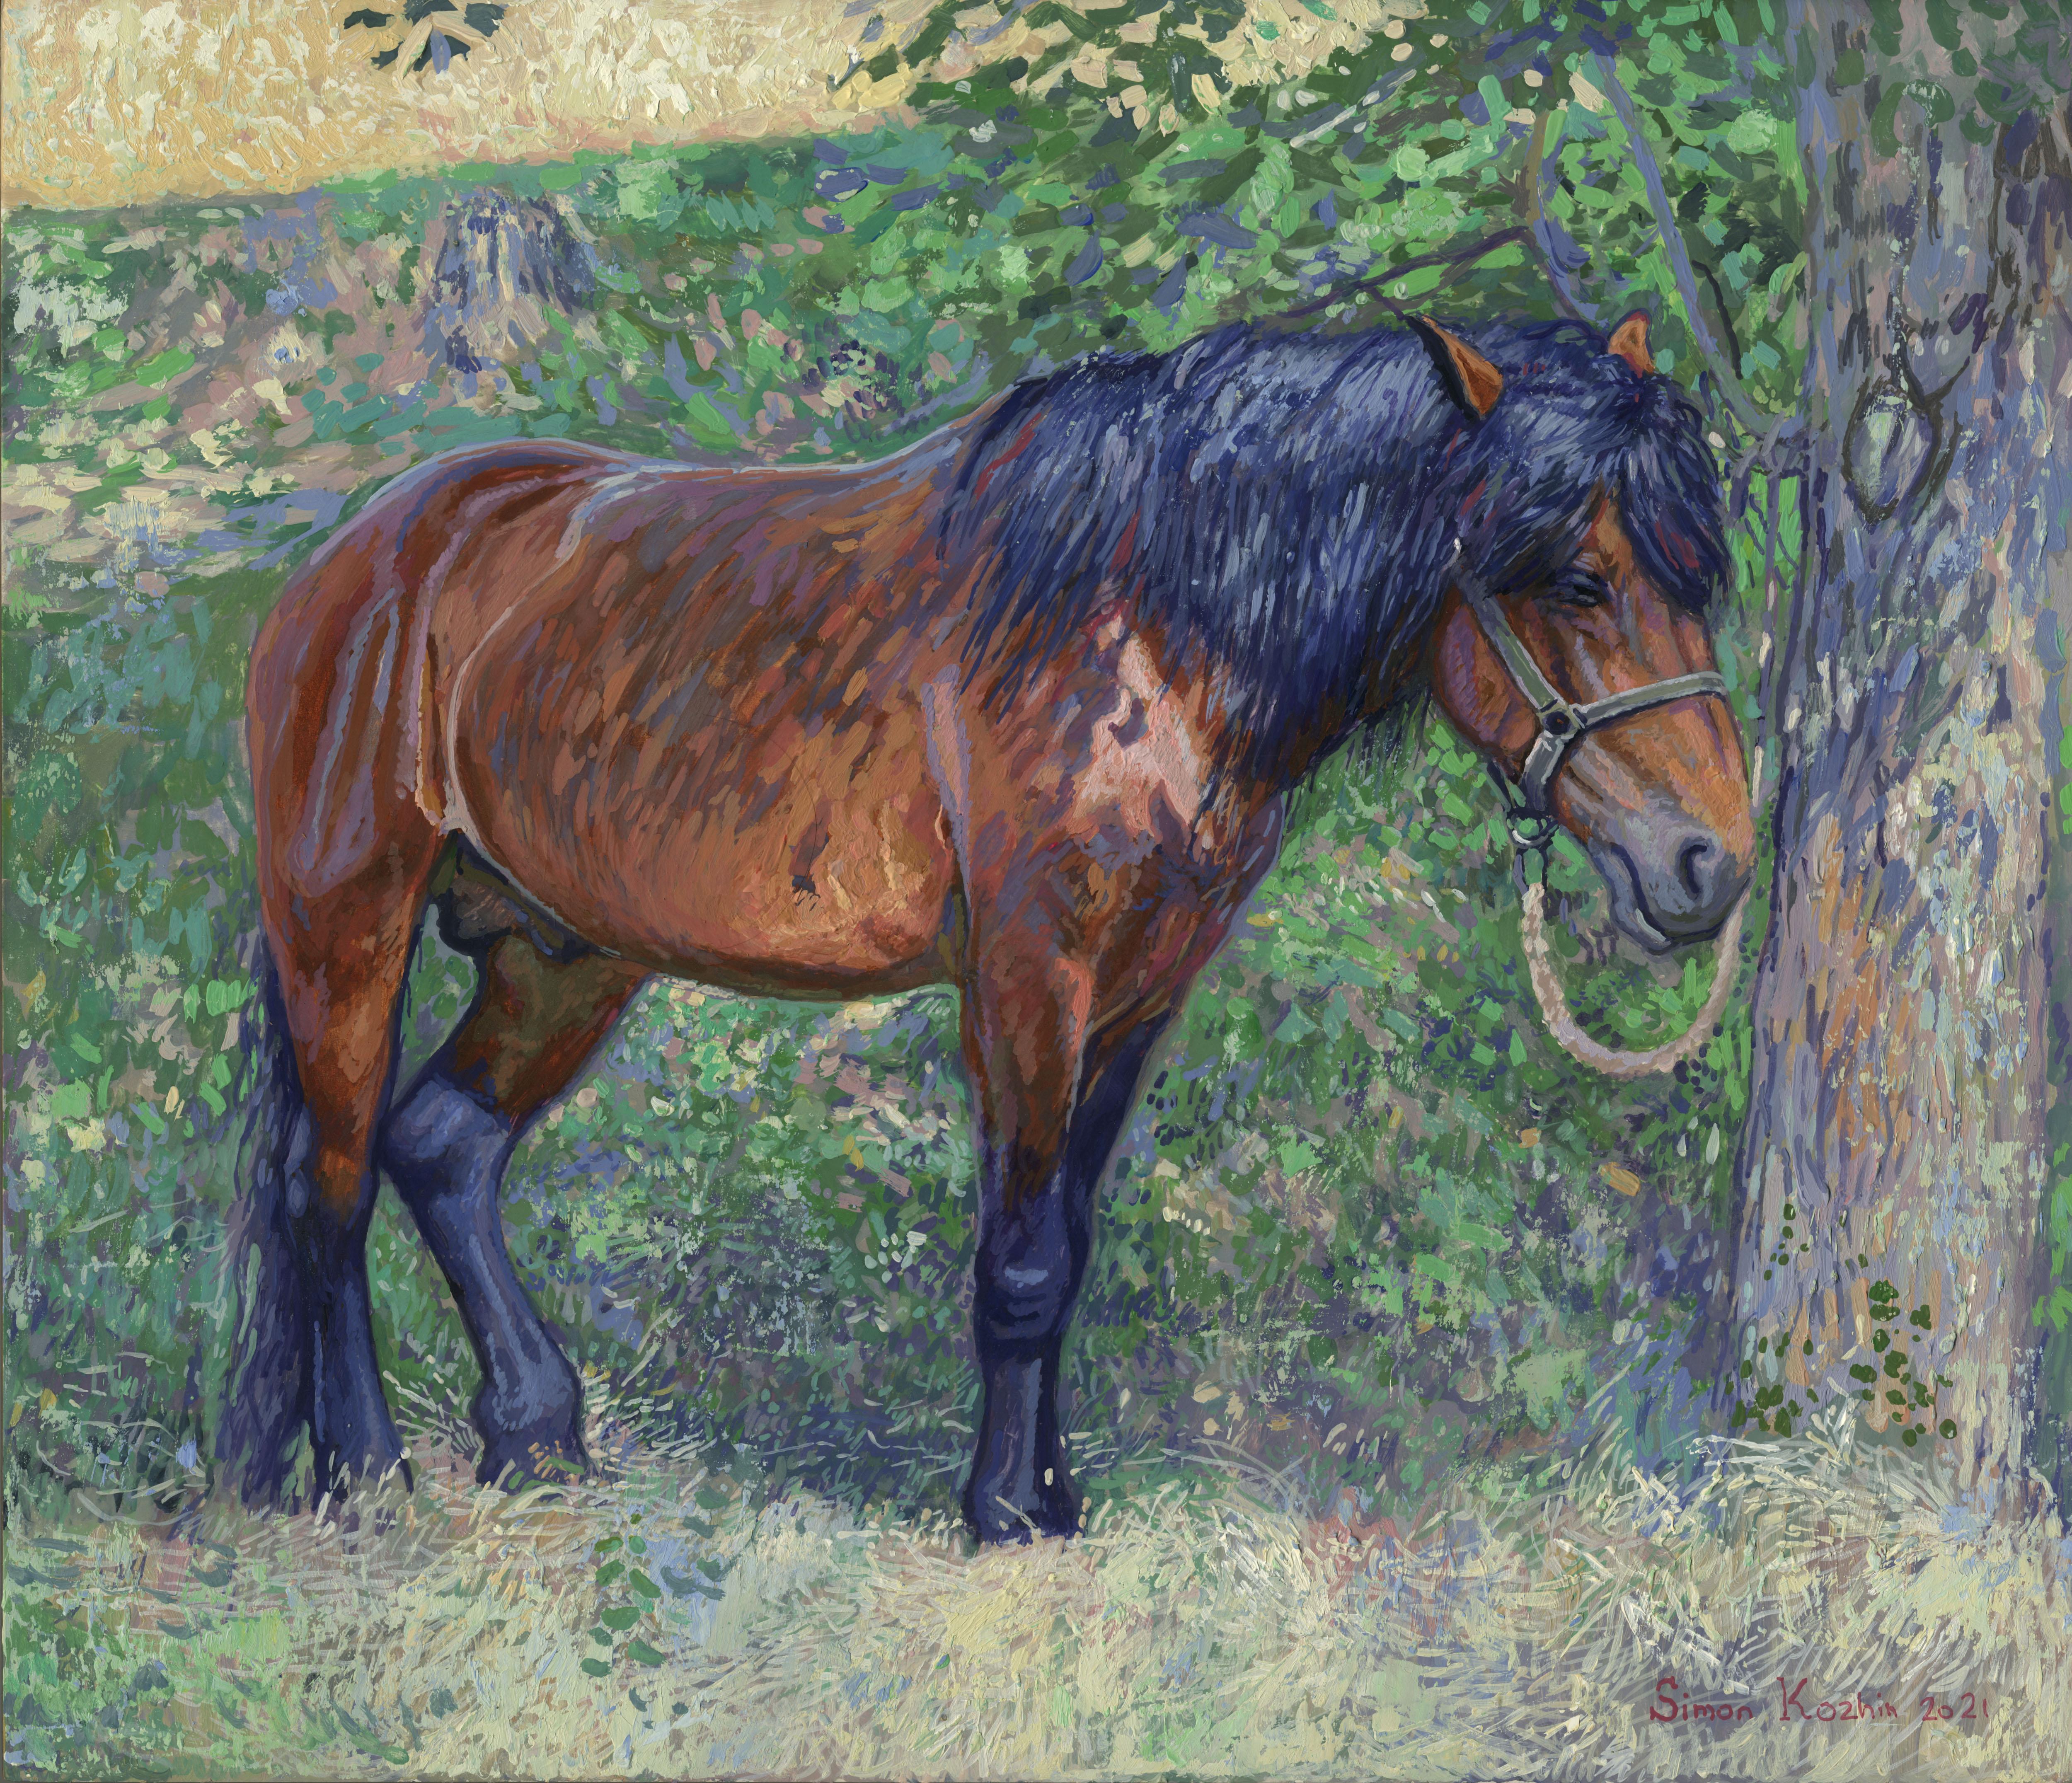 Simon Kozhin Animal Painting - Horse in the shade of trees